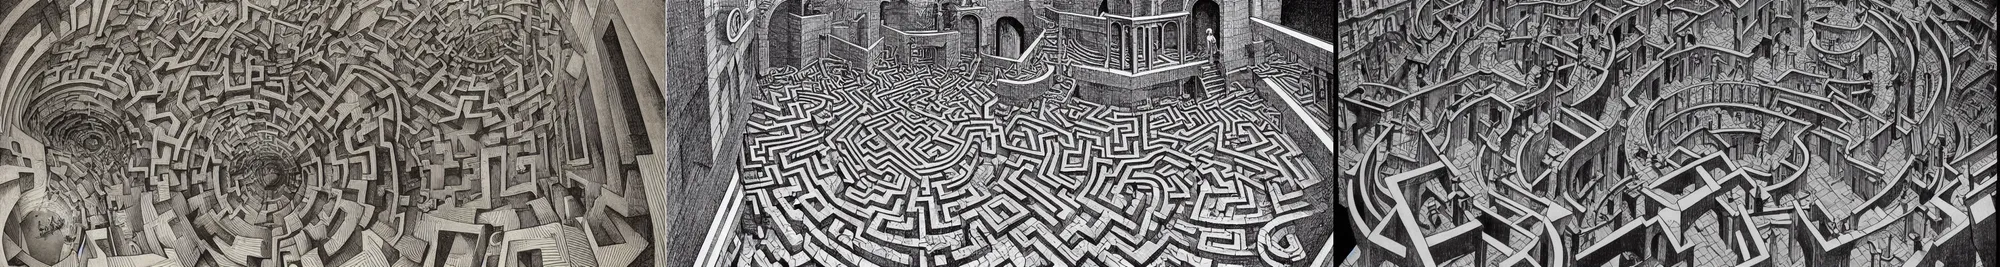 Prompt: a labyrinth by Escher and Francois Schuiten